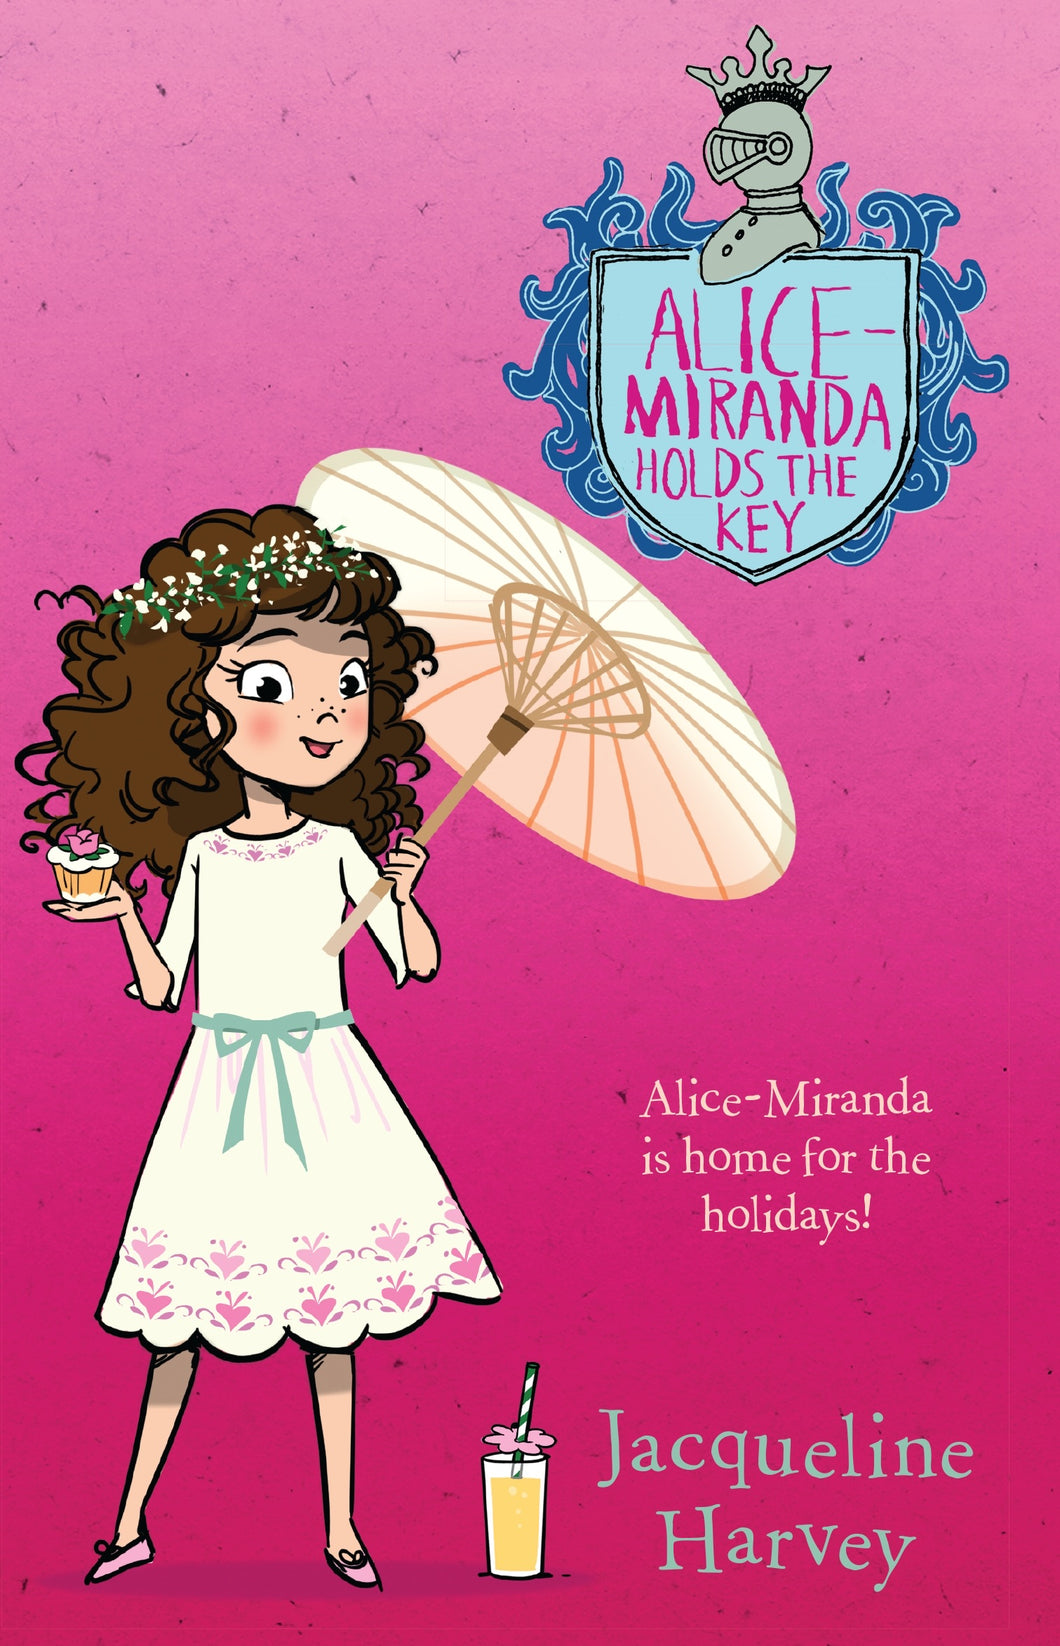 Alice-Miranda Holds the Key (Book #15) by Jacqueline Harvey